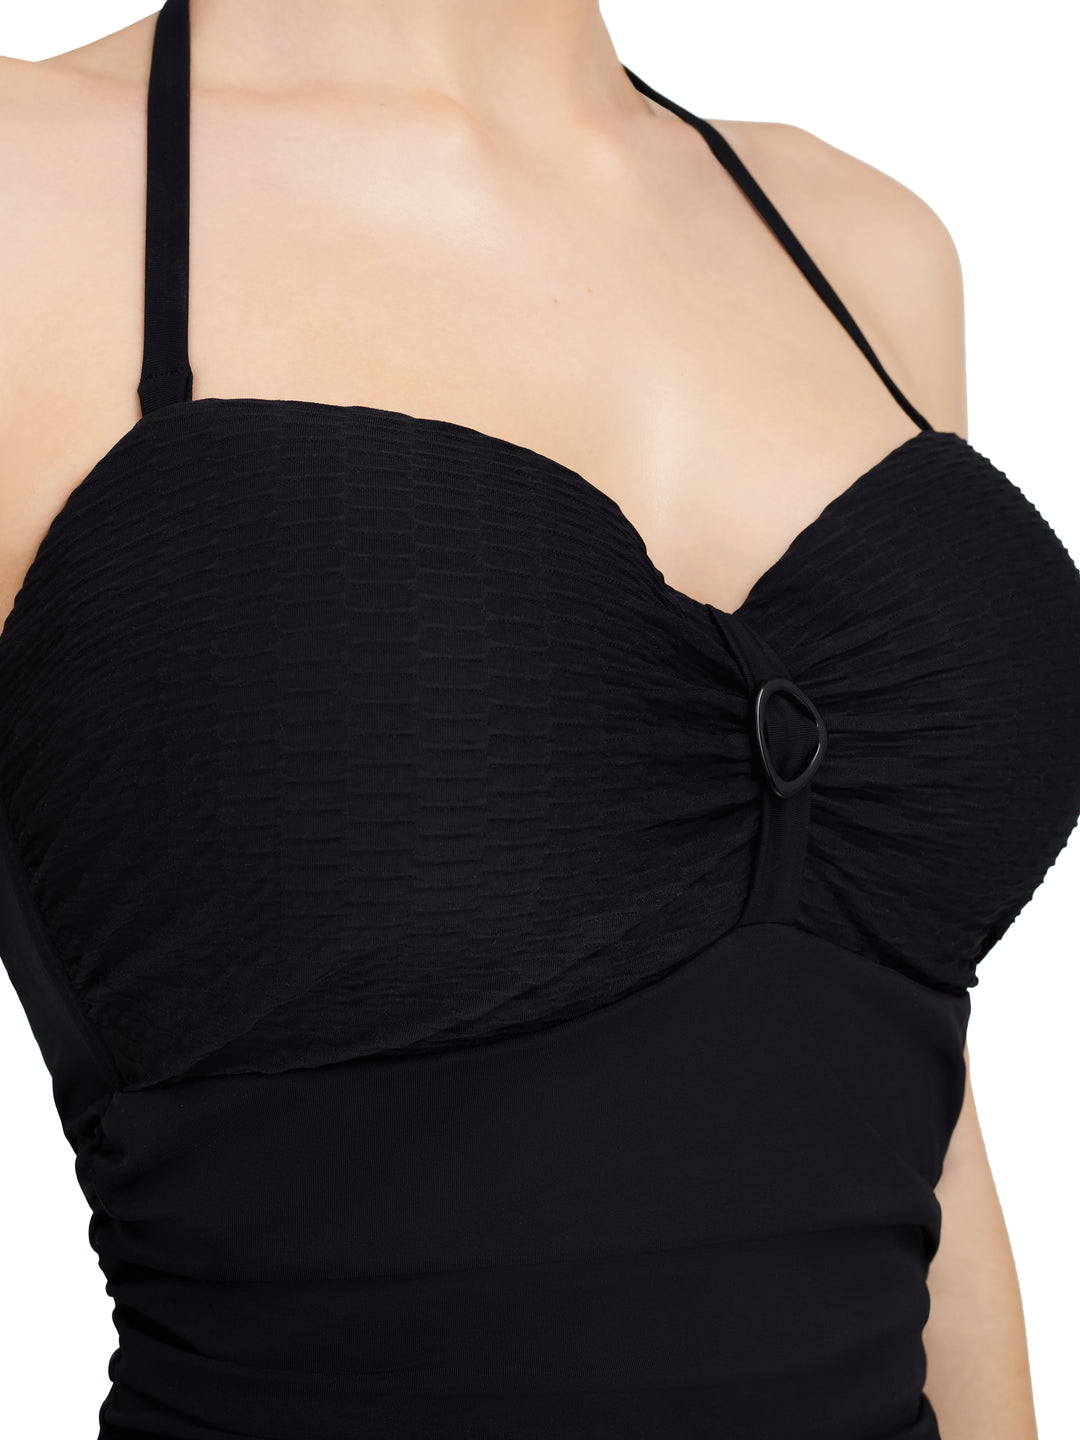 Femilet Swimwear - Bonaire Bandeau T-Shirt Swimsuit Black